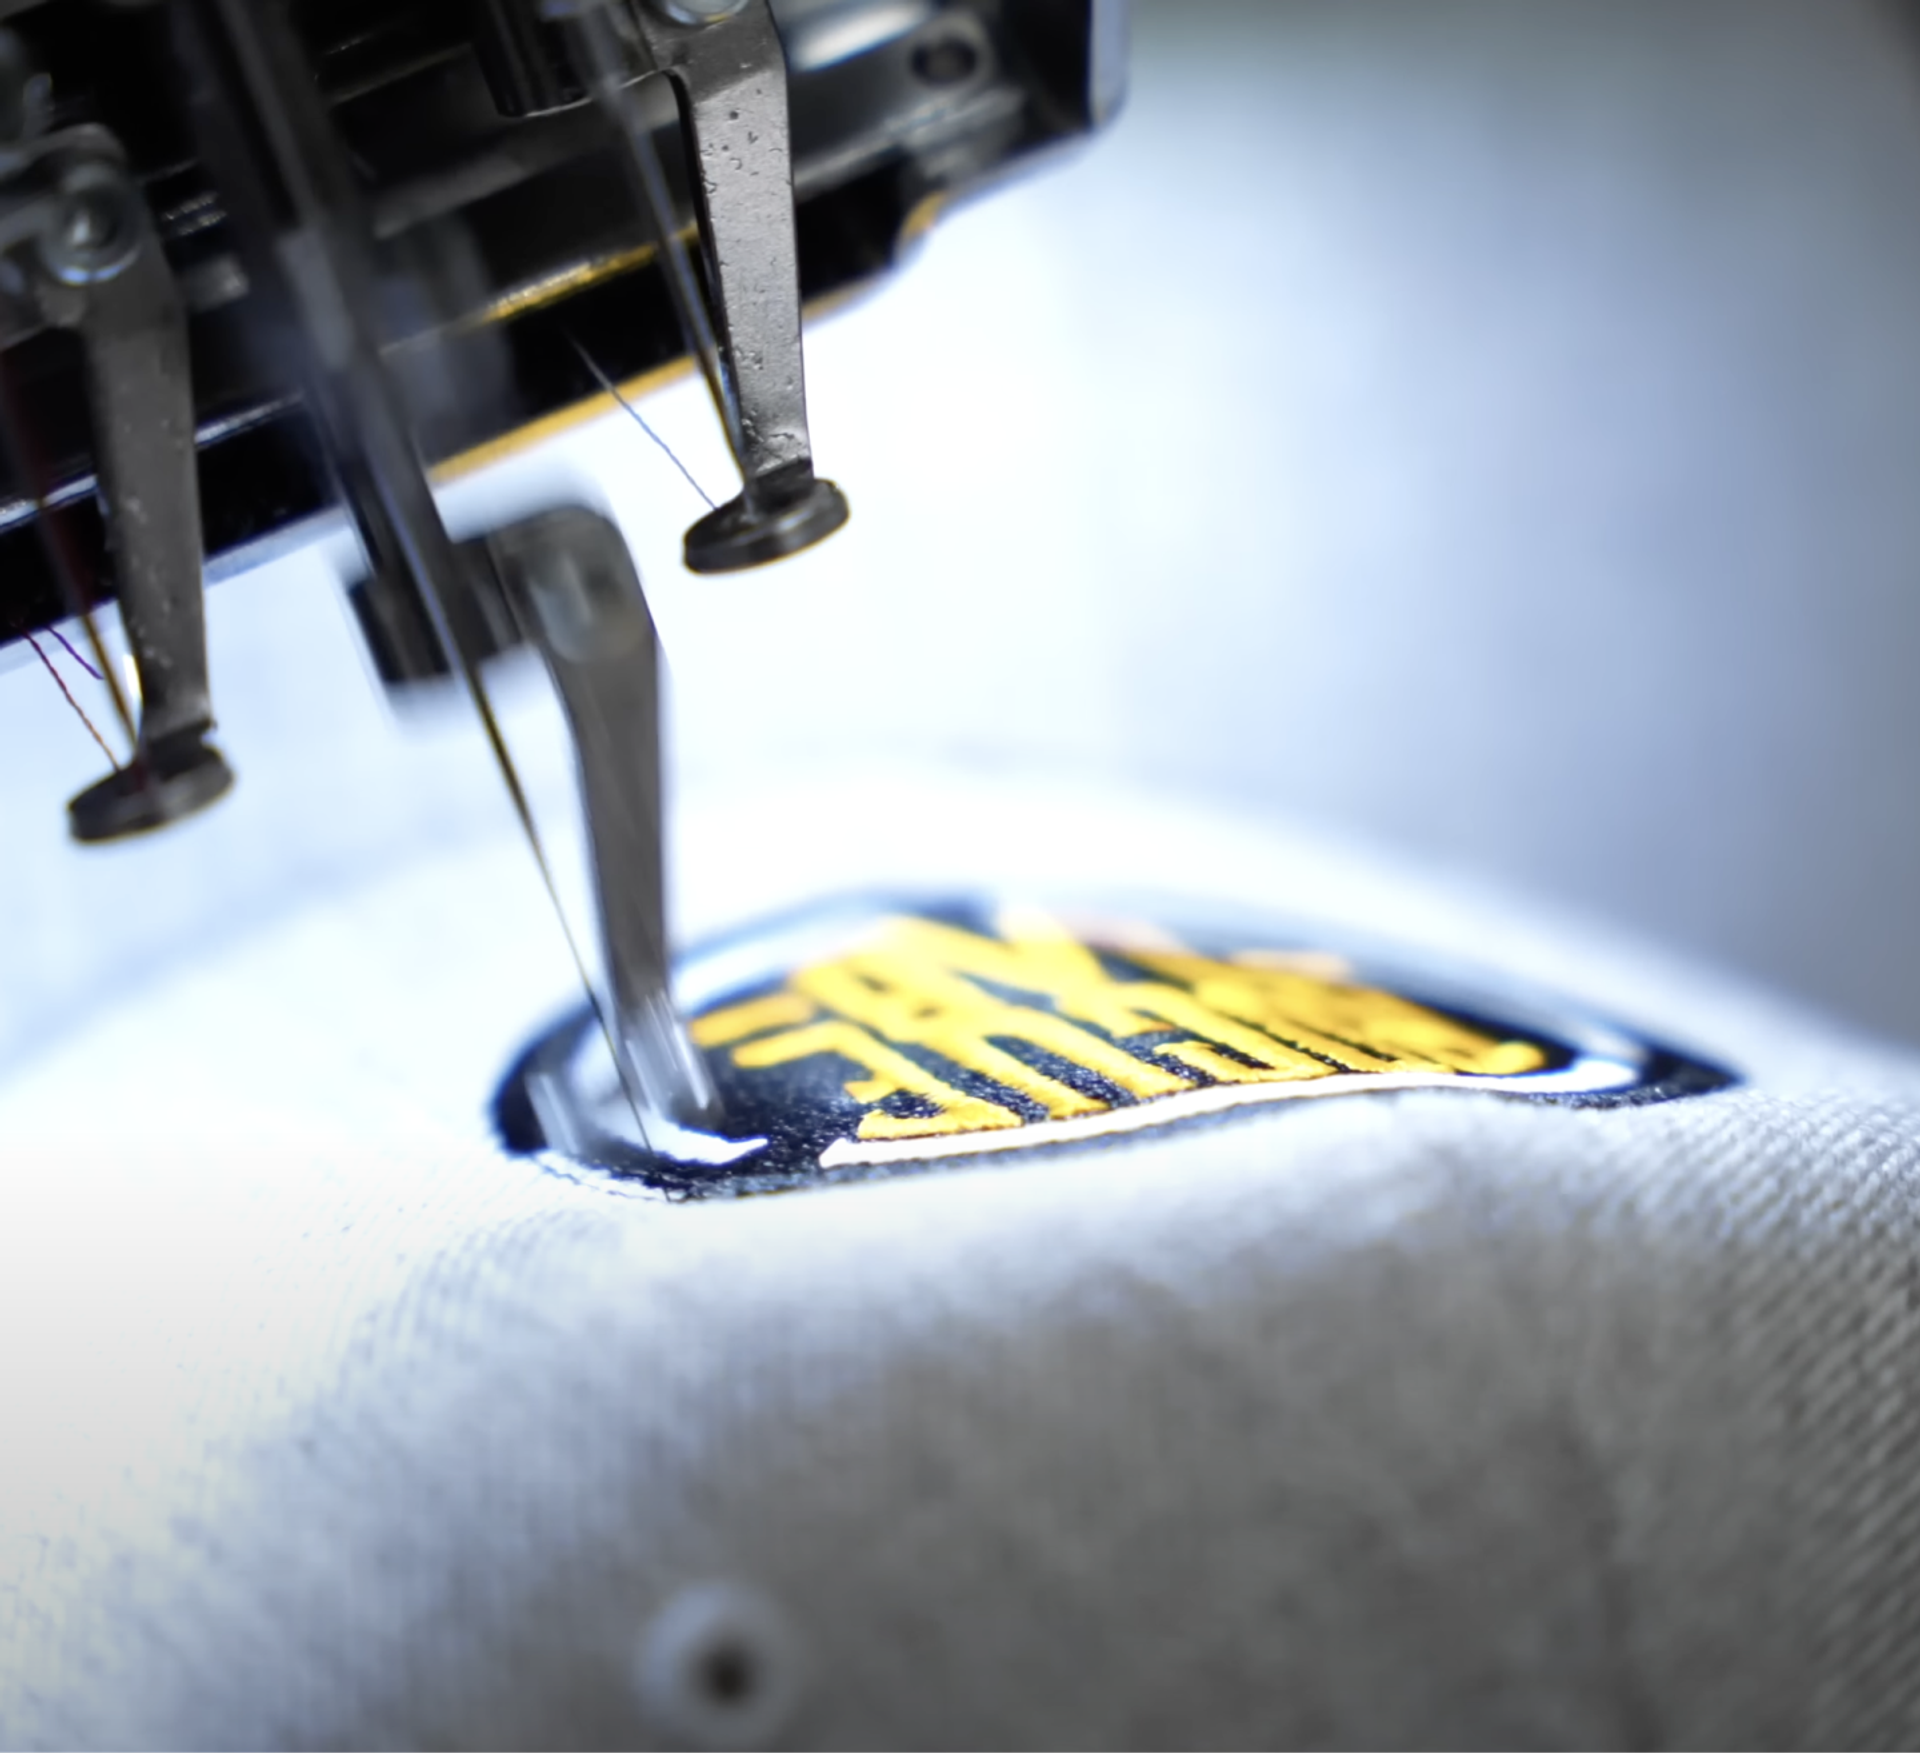 A close up of a Creator Studio embroidery machine